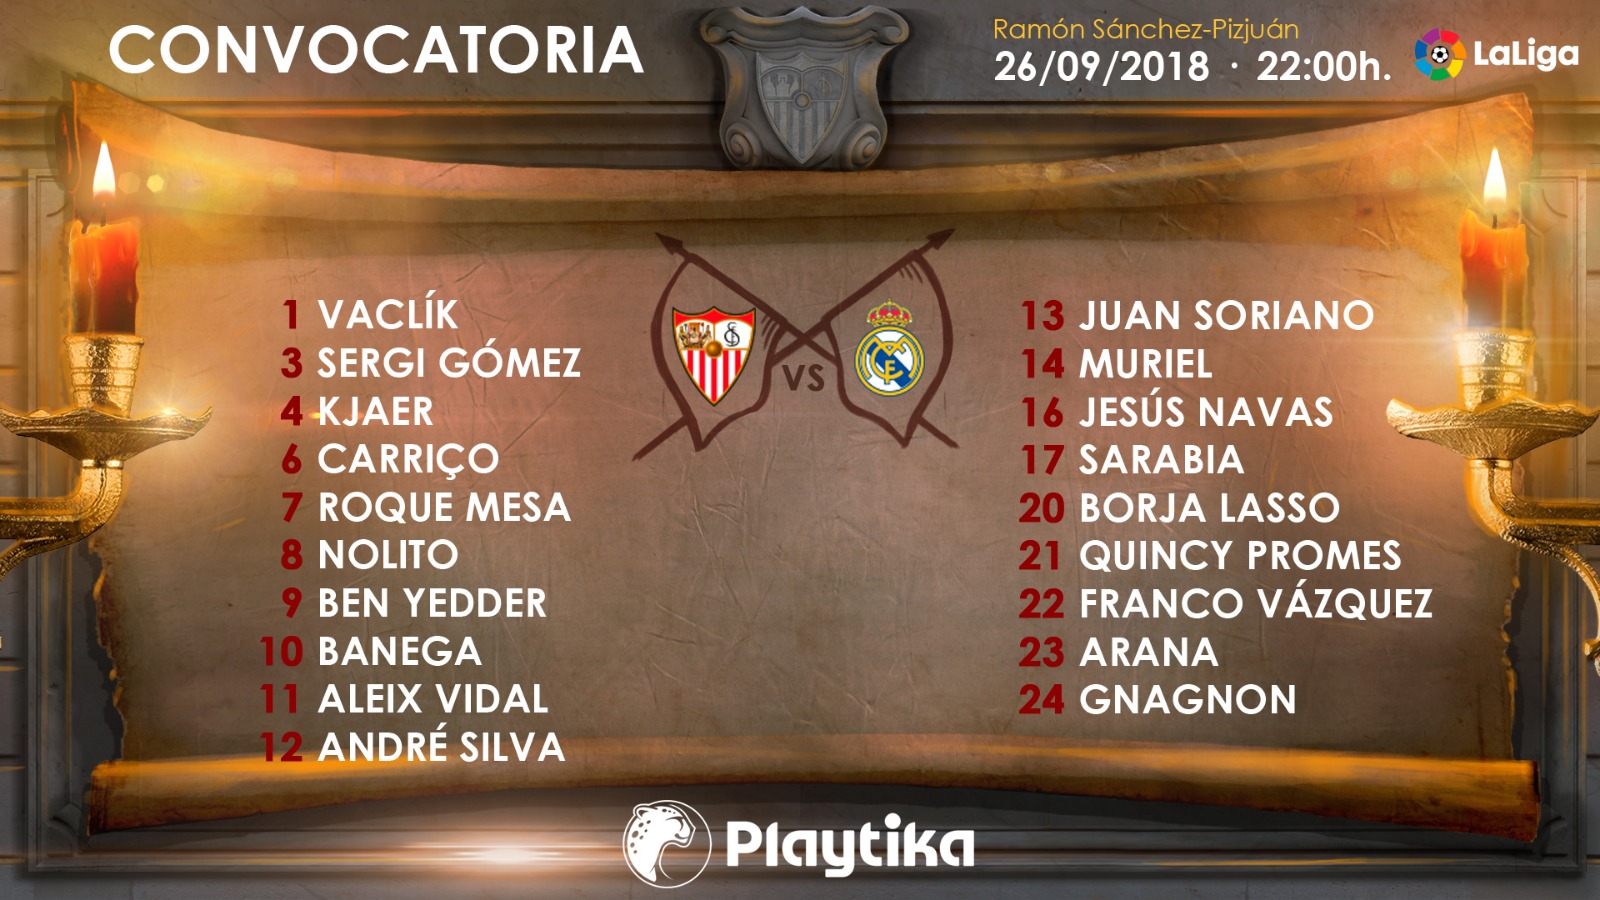 Squad list for Madrid